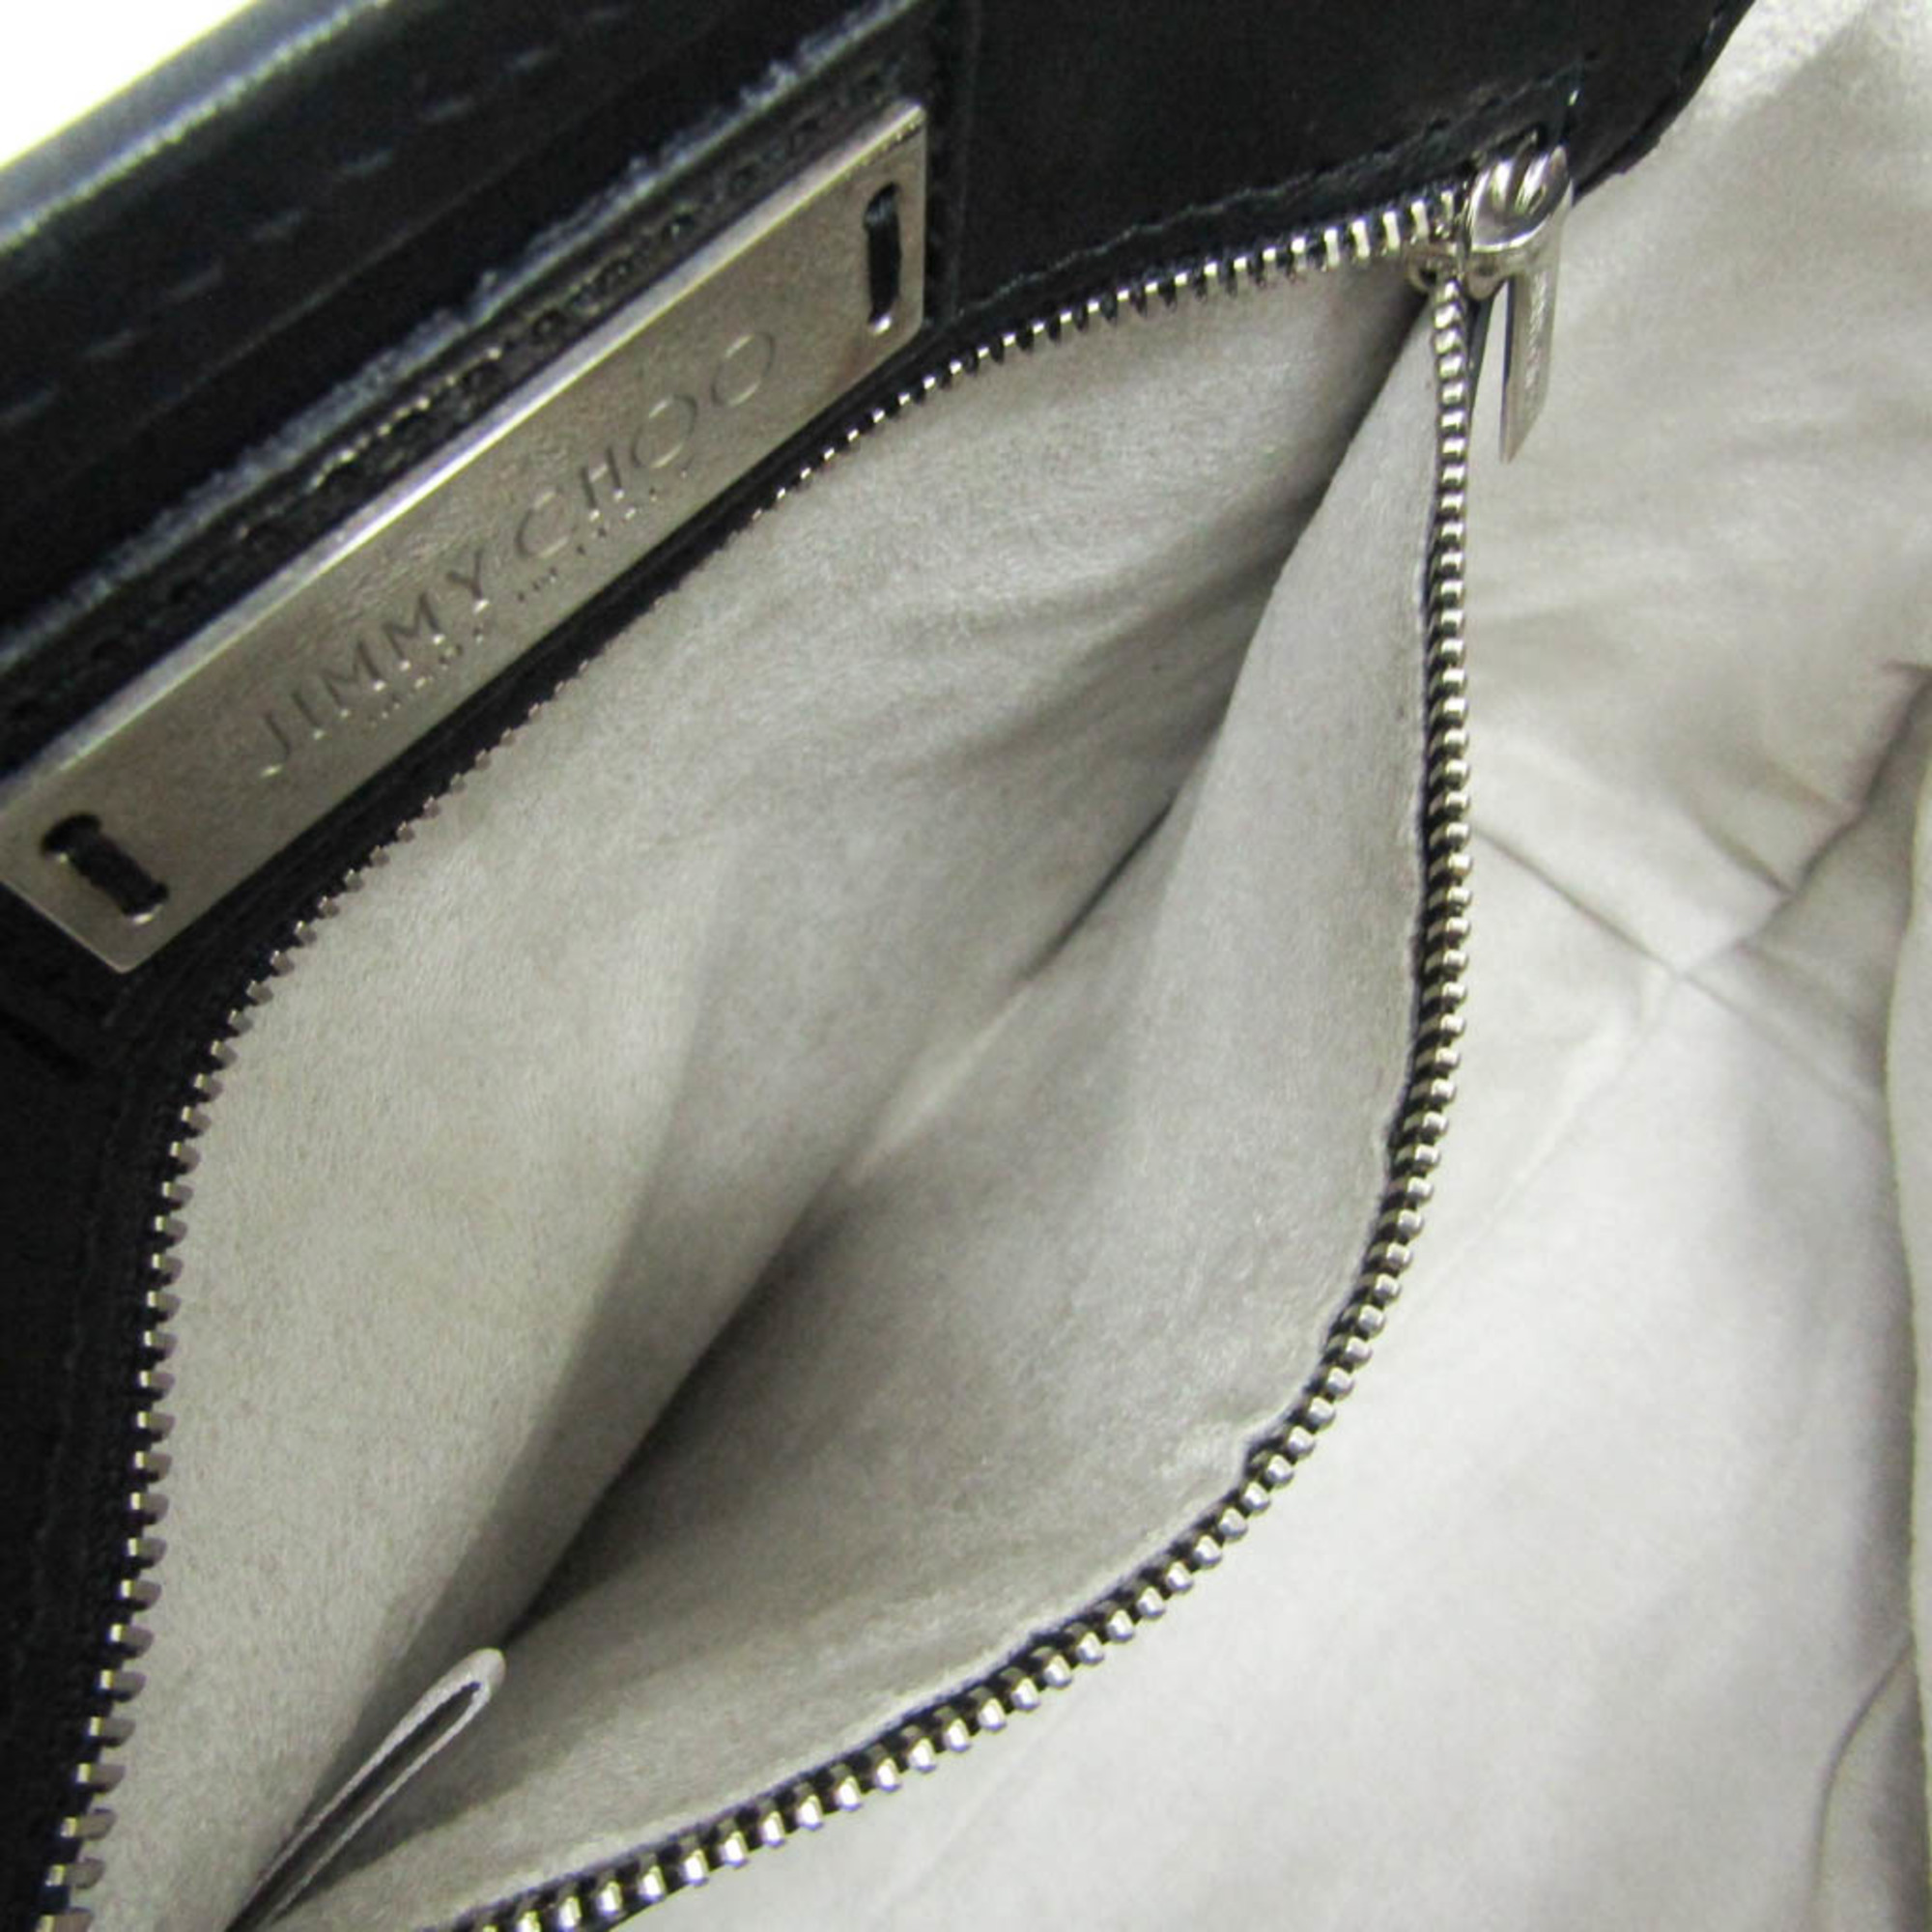 Jimmy Choo Sasha S Women's Leather Tote Bag Black